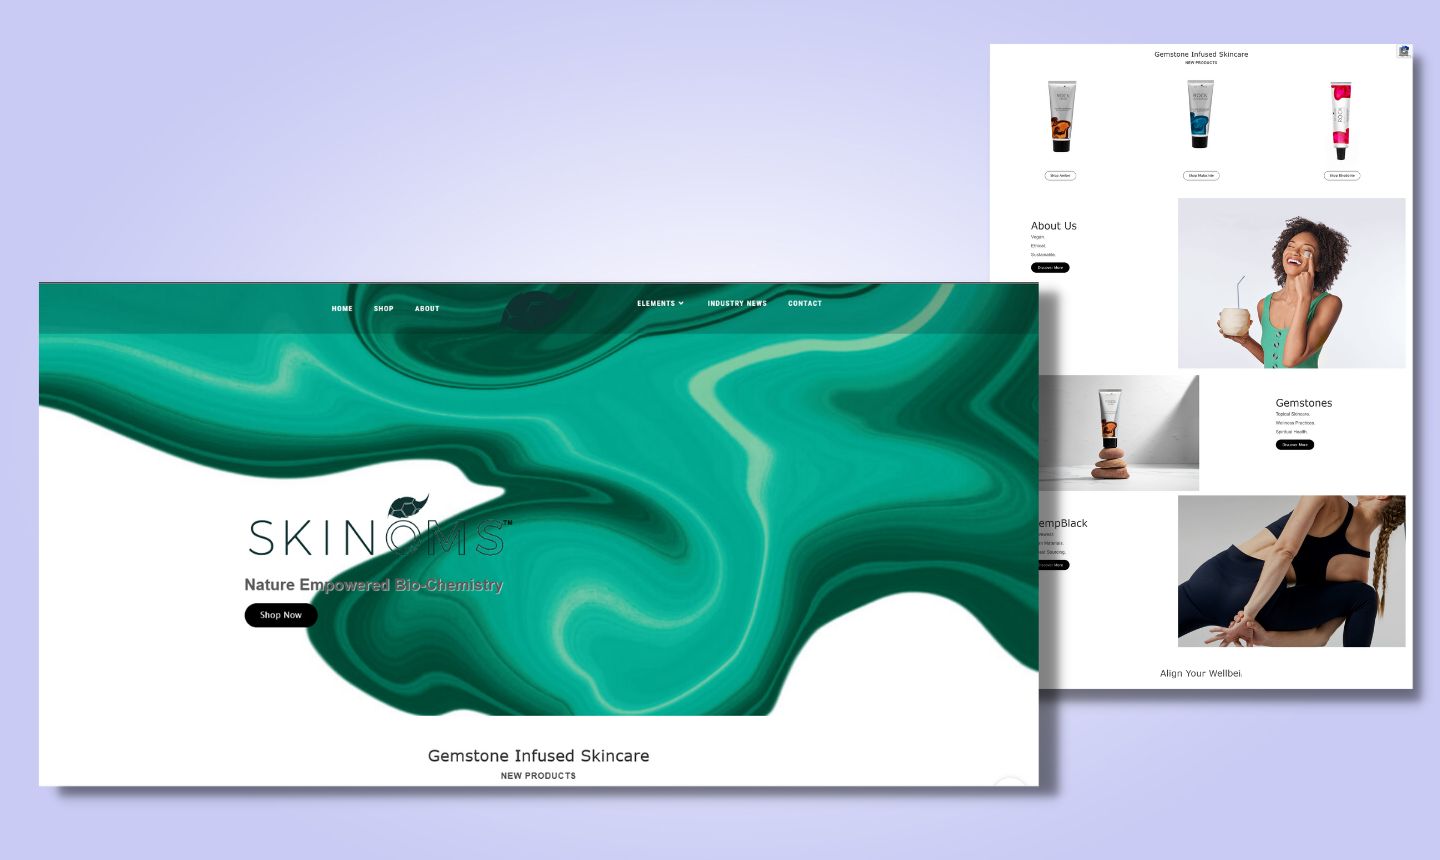 Skinoms.com Website design by DigitalMarketingNetic